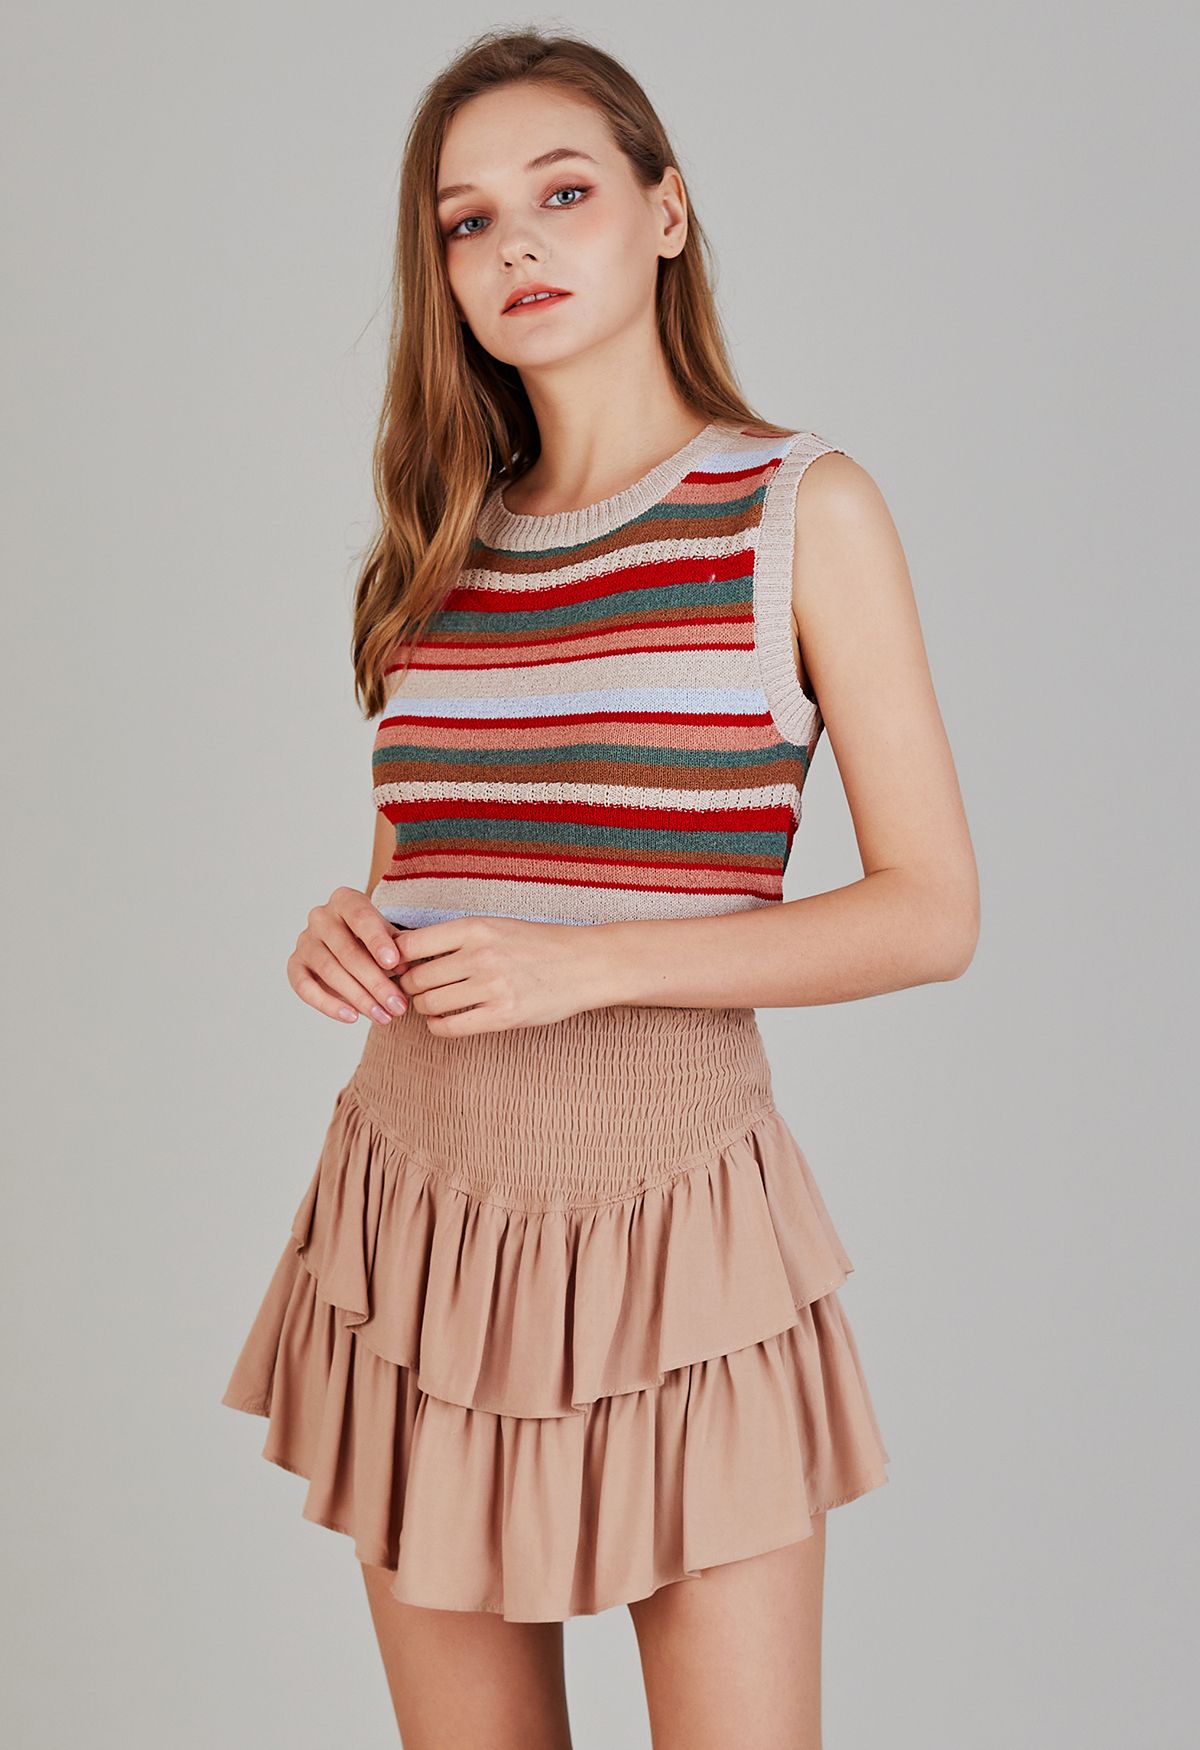 Tiered Ruffle Shirred Waist Mini Skirt in Tan